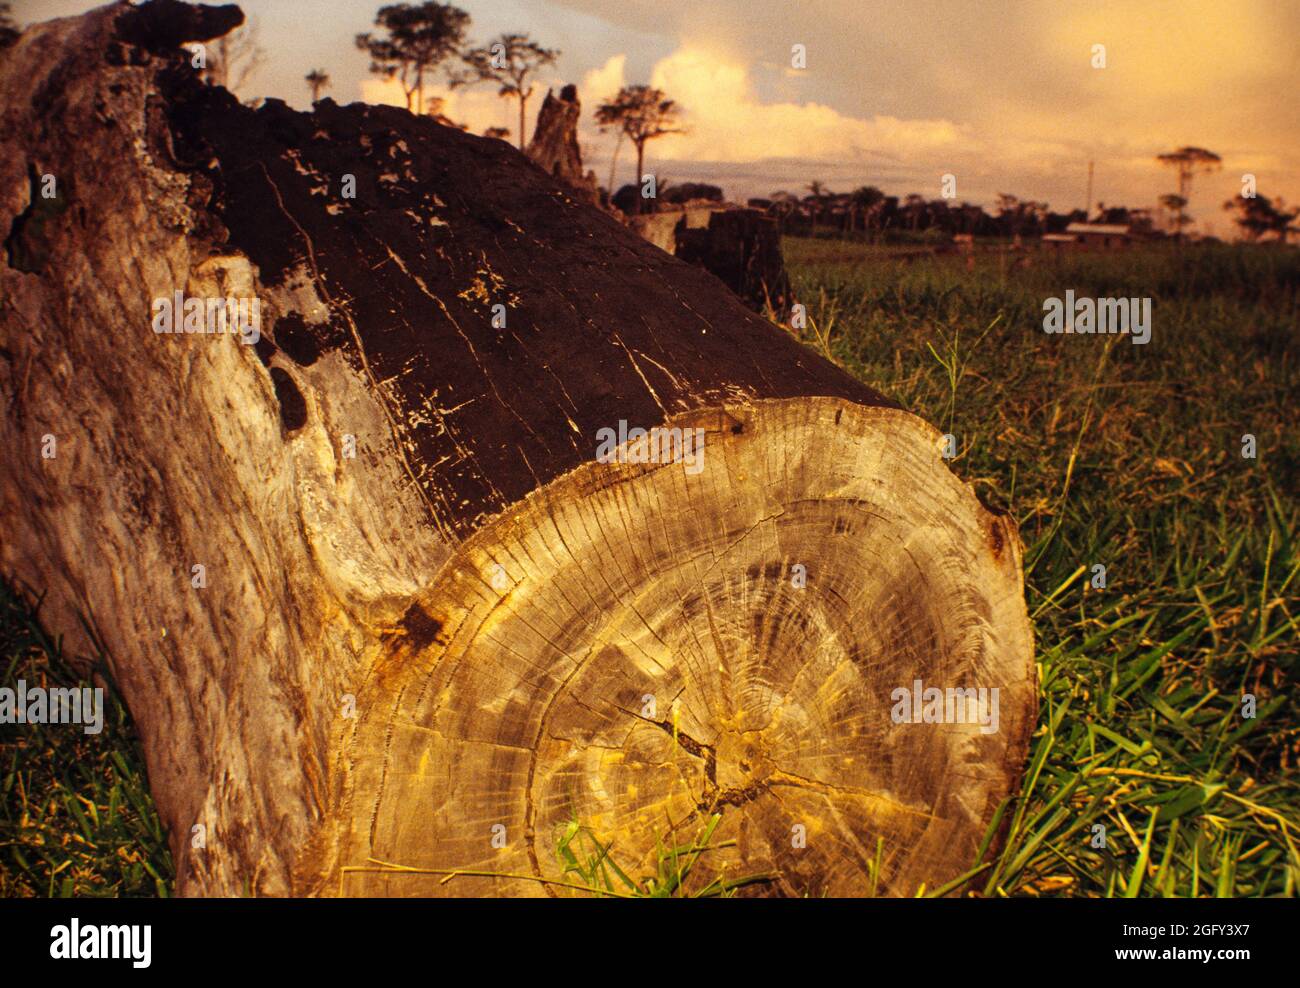 Amazonas-Abholzung, brannte Brasilien Nussbaum Trunkk. Stockfoto